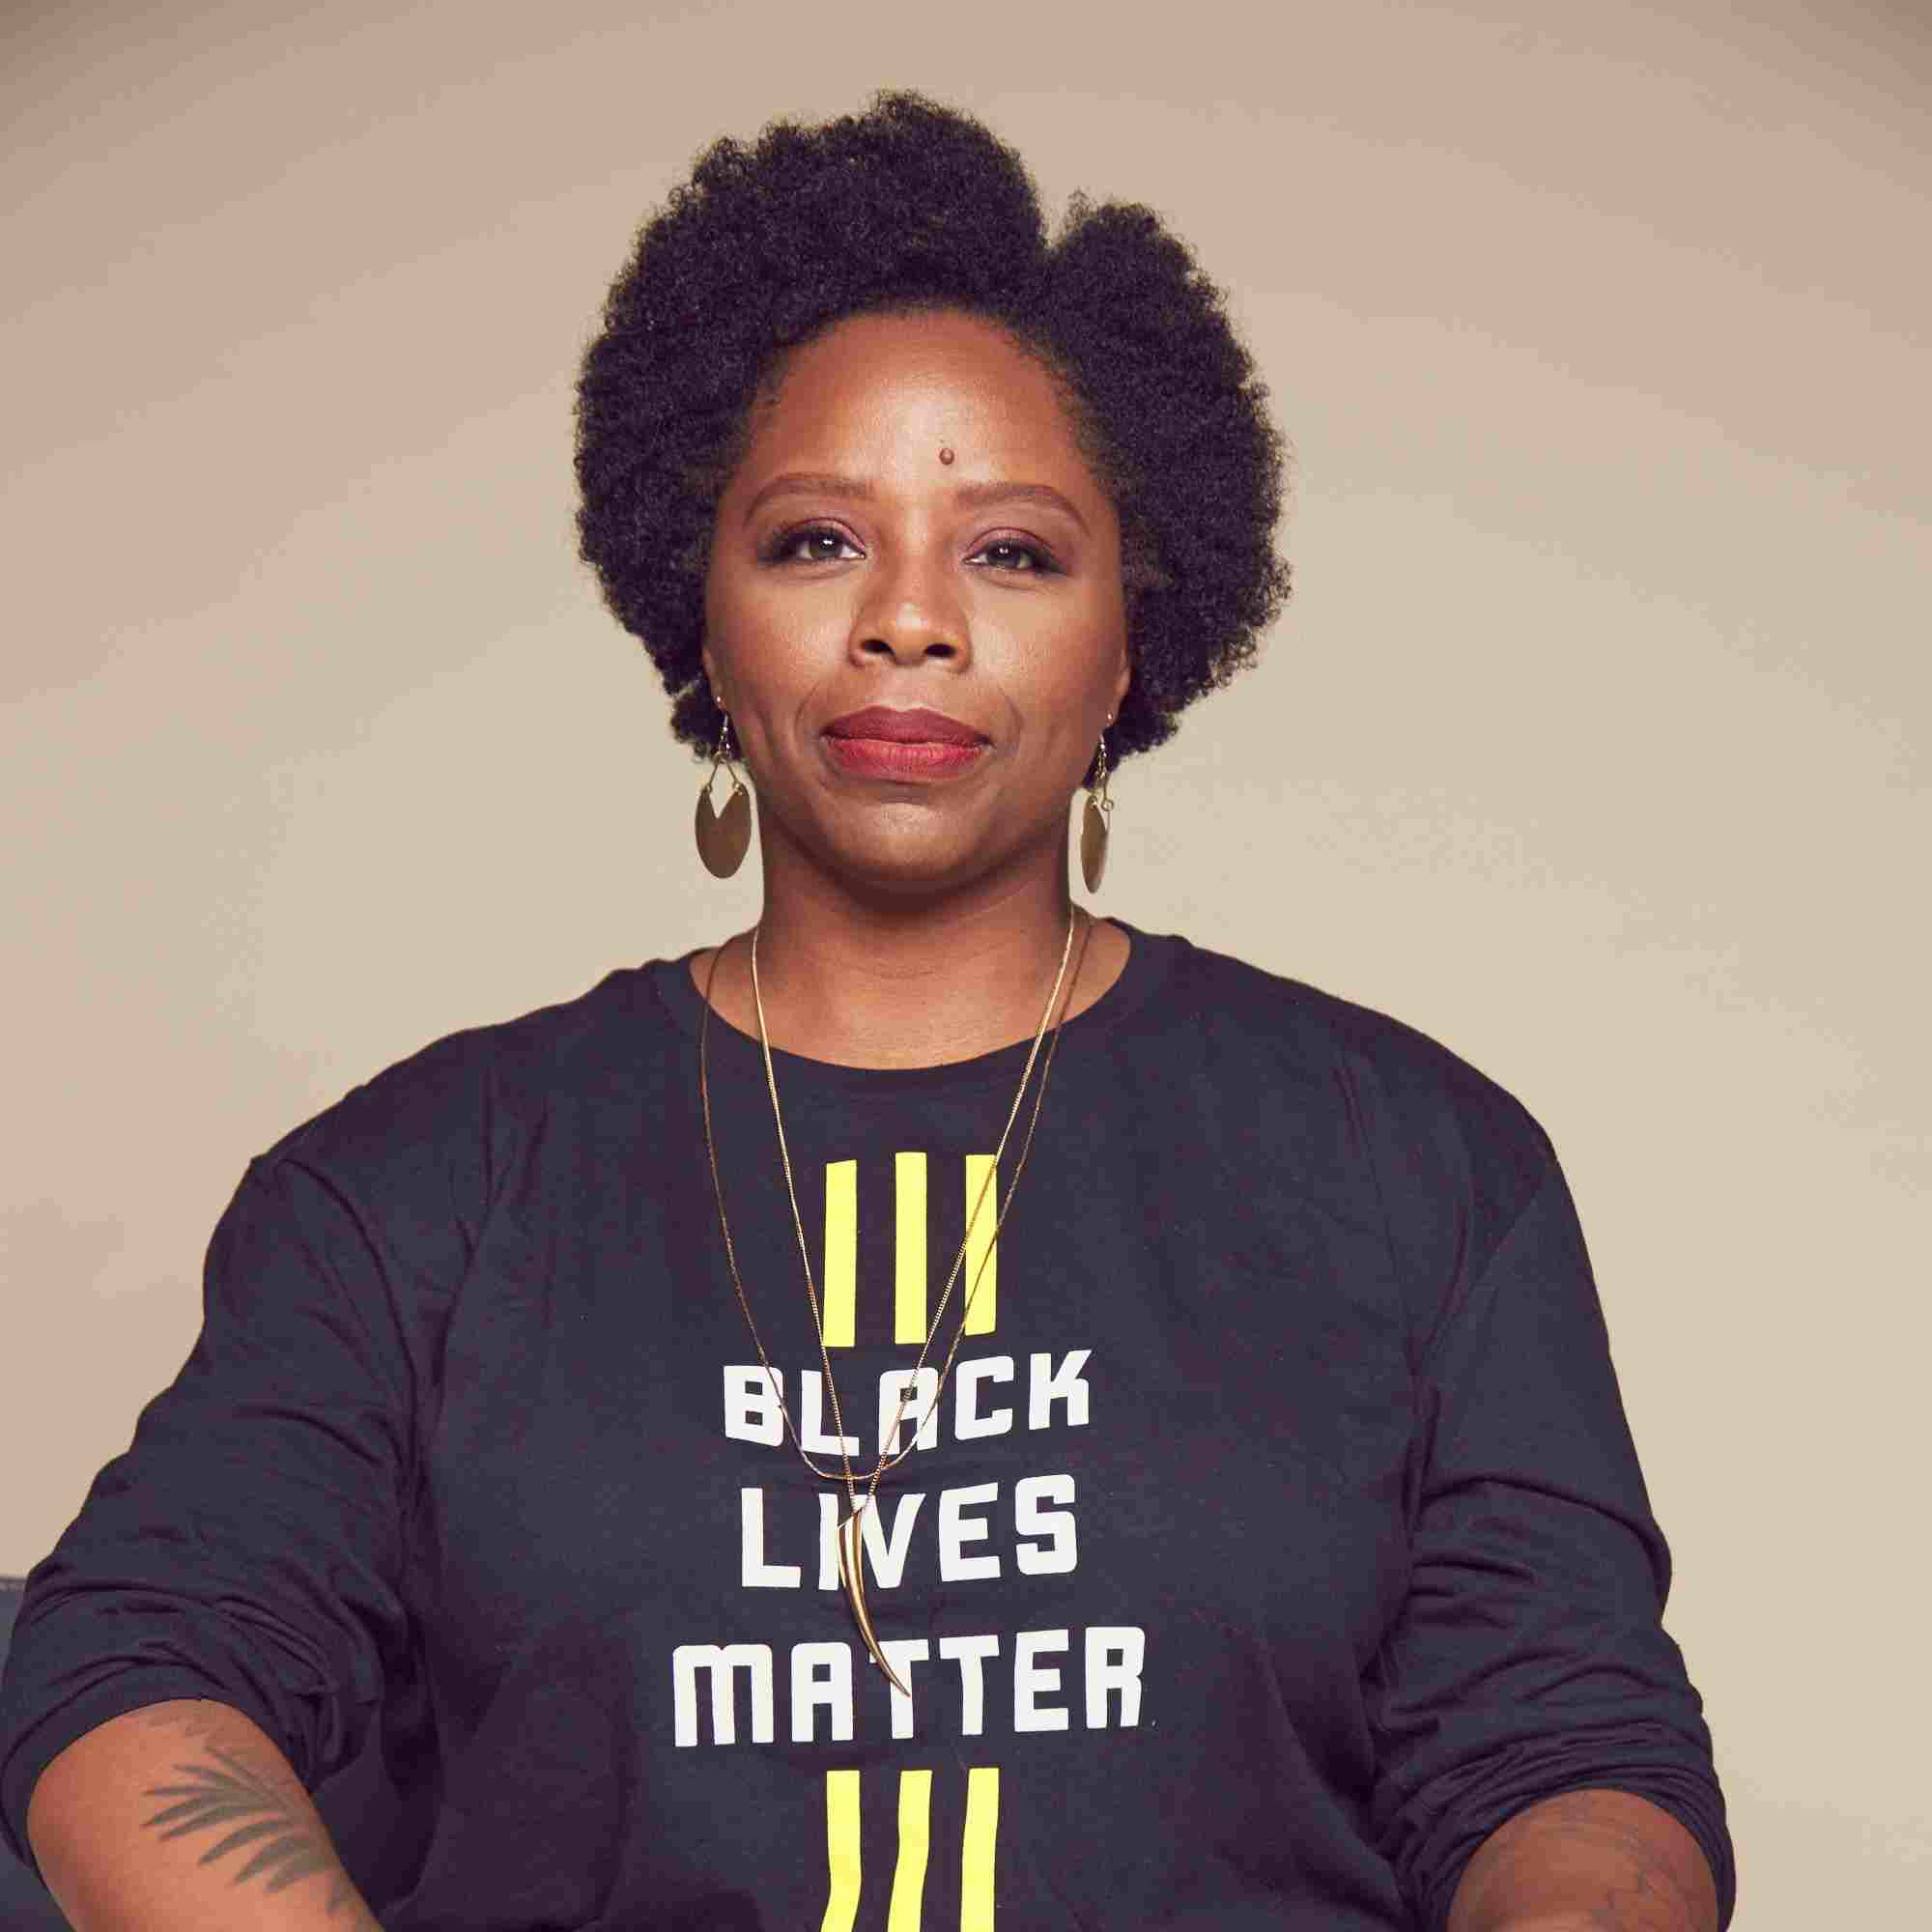 Image of Black Lives Matter Movement's founder, Patrisse Cullors 